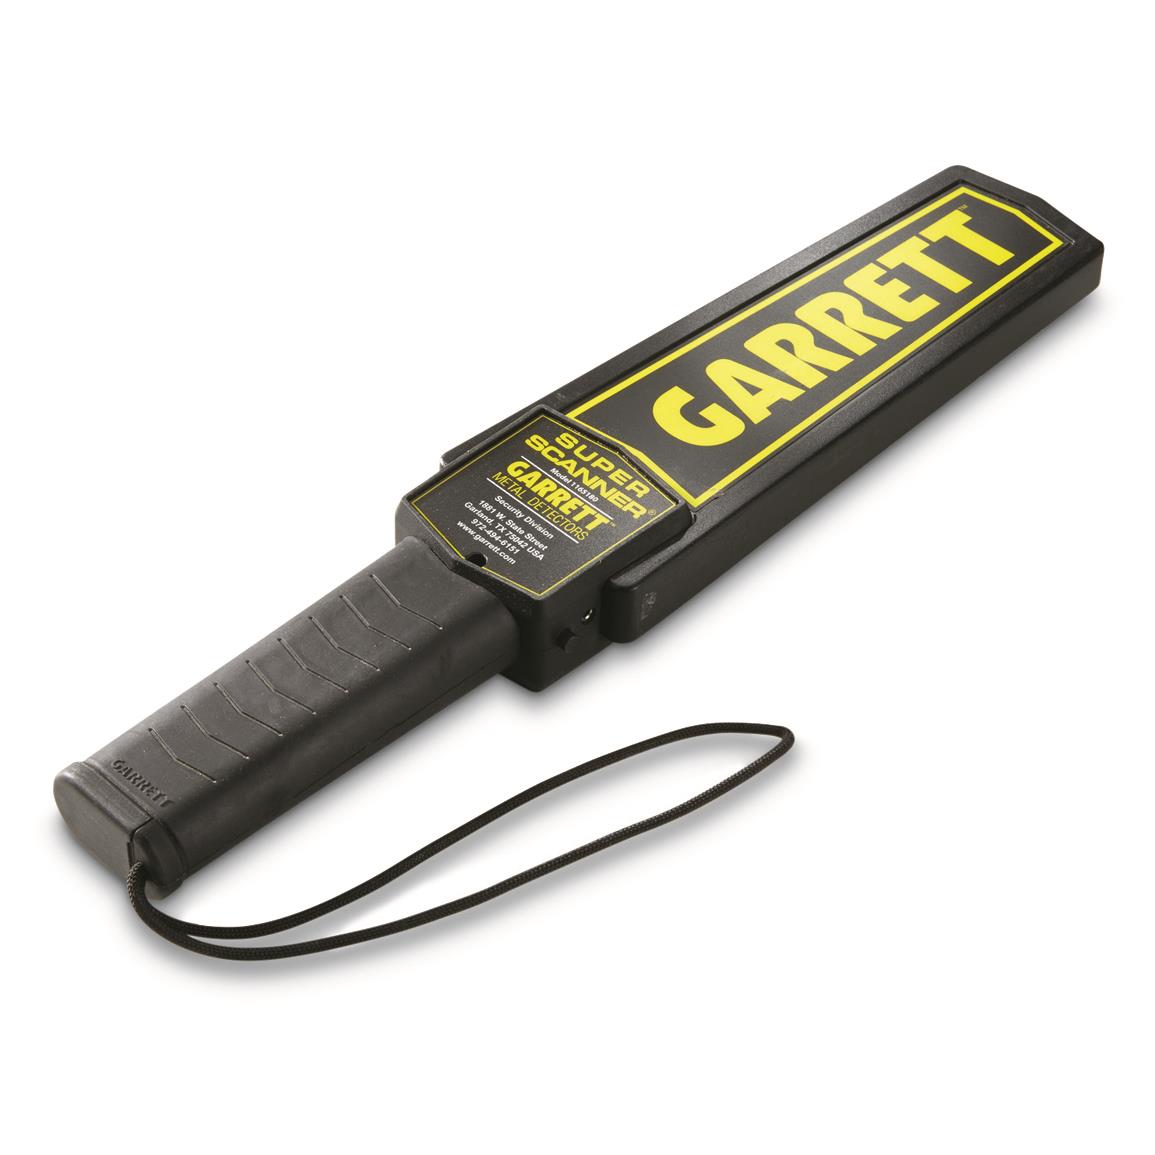 U.S. Municipal Surplus Garrett Handheld Metal Detector, Used